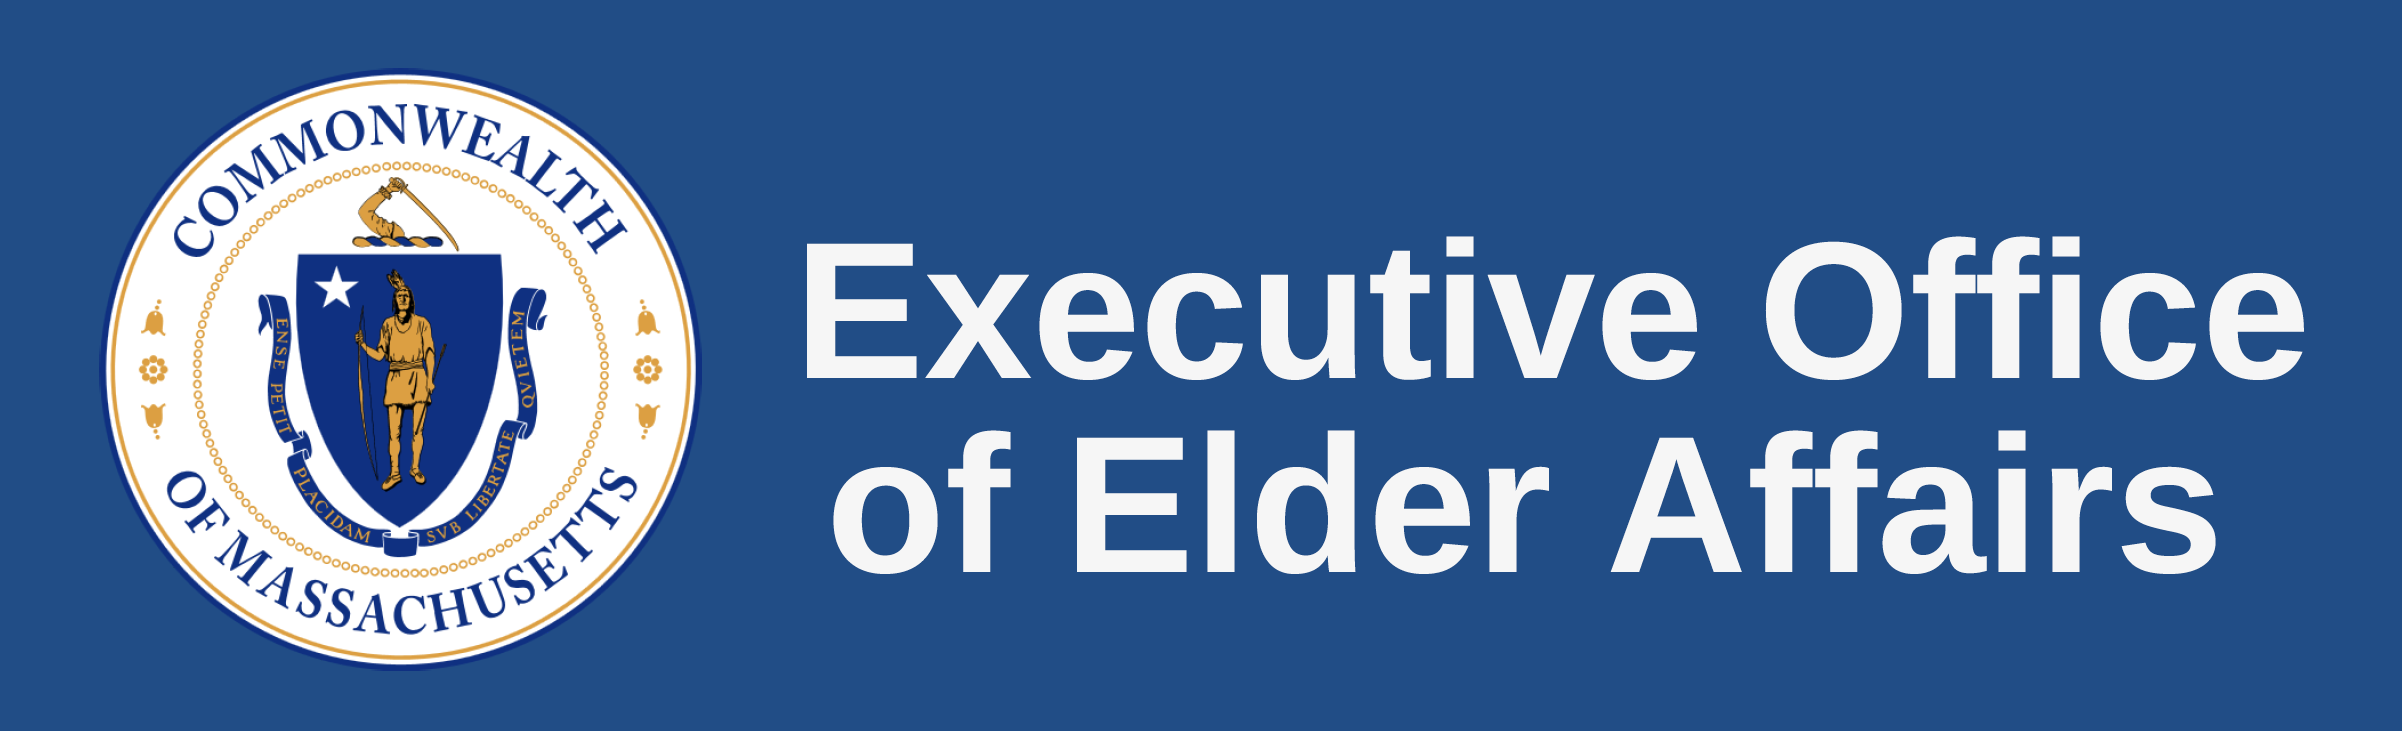 Executive Office of Elder Affairs